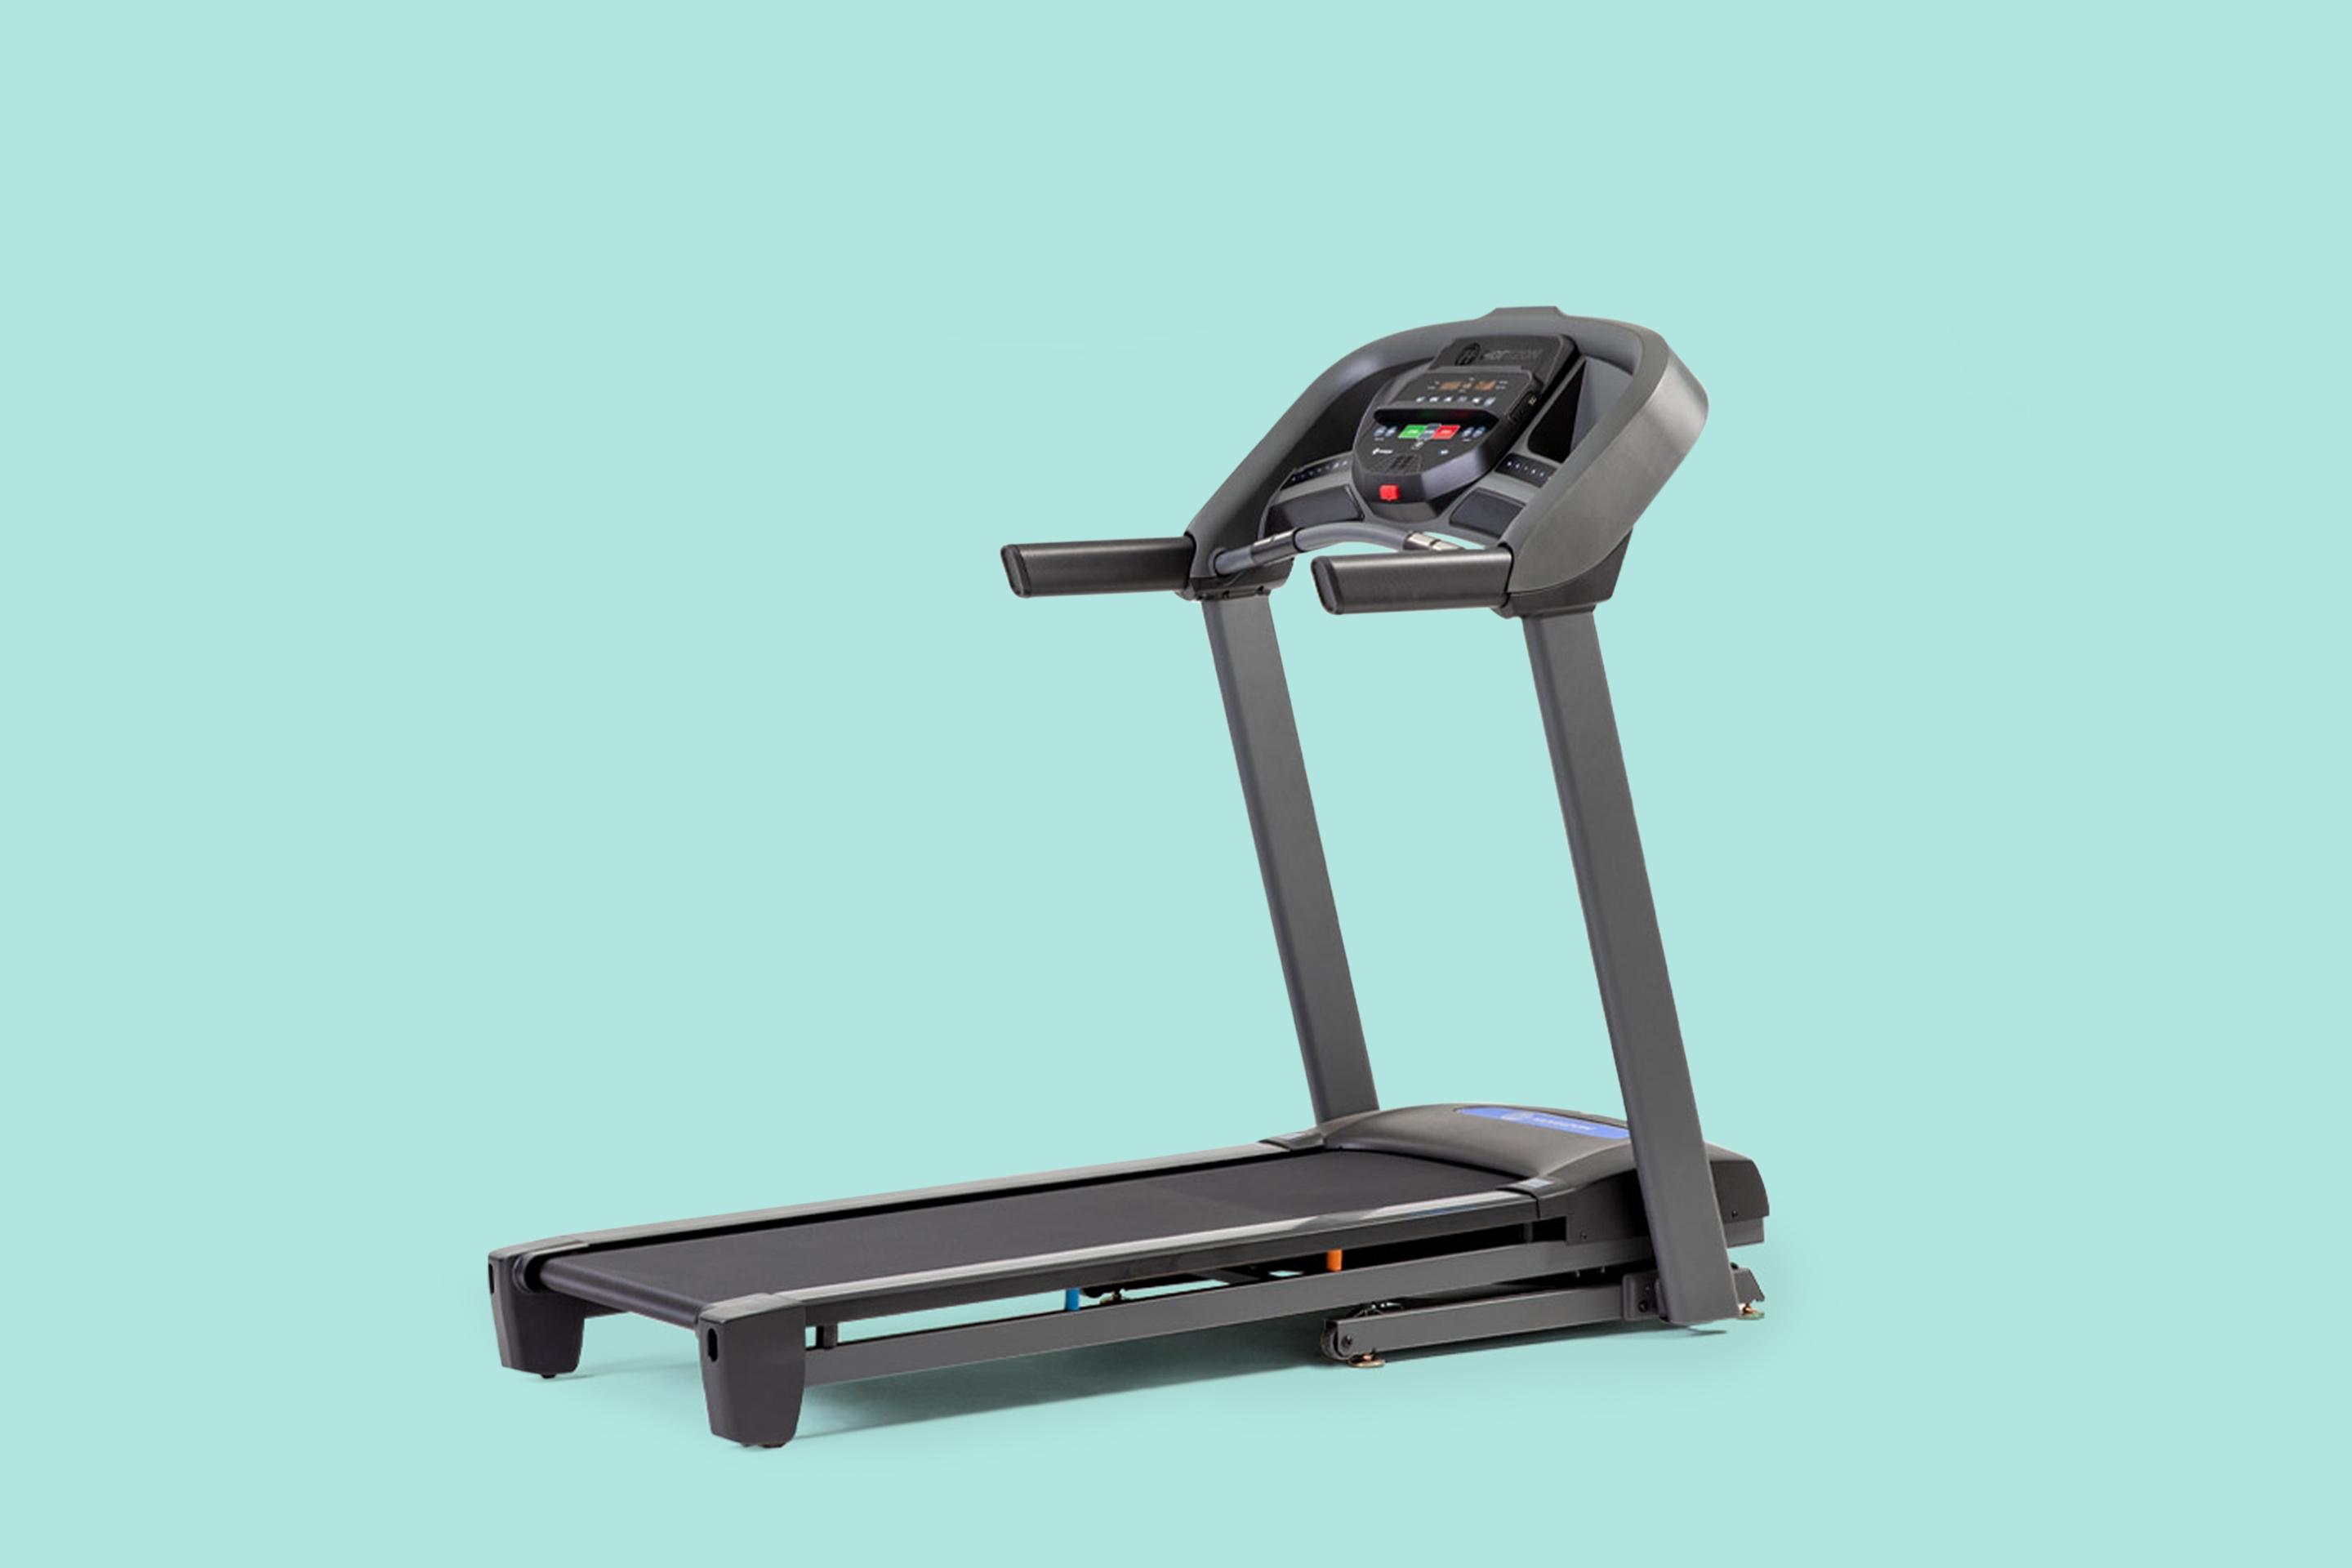 Horizon Fitness T101 Foldable Treadmill